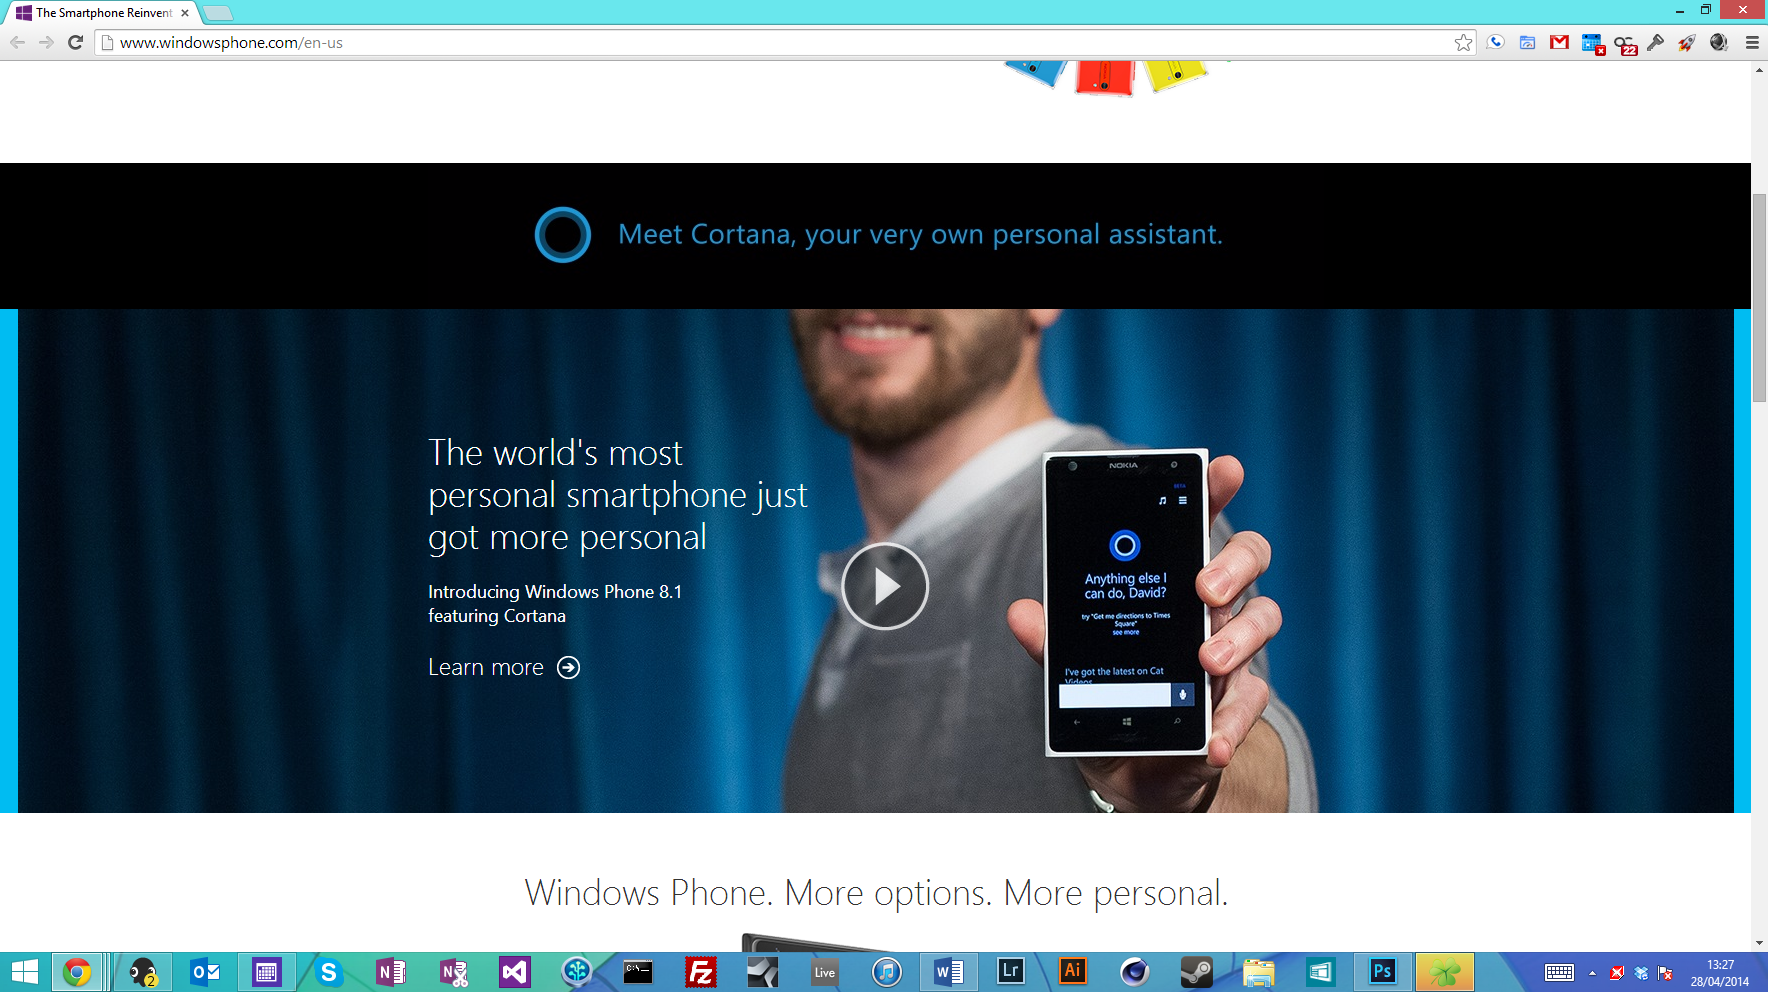 Windows Phone Landing Page With Cortana